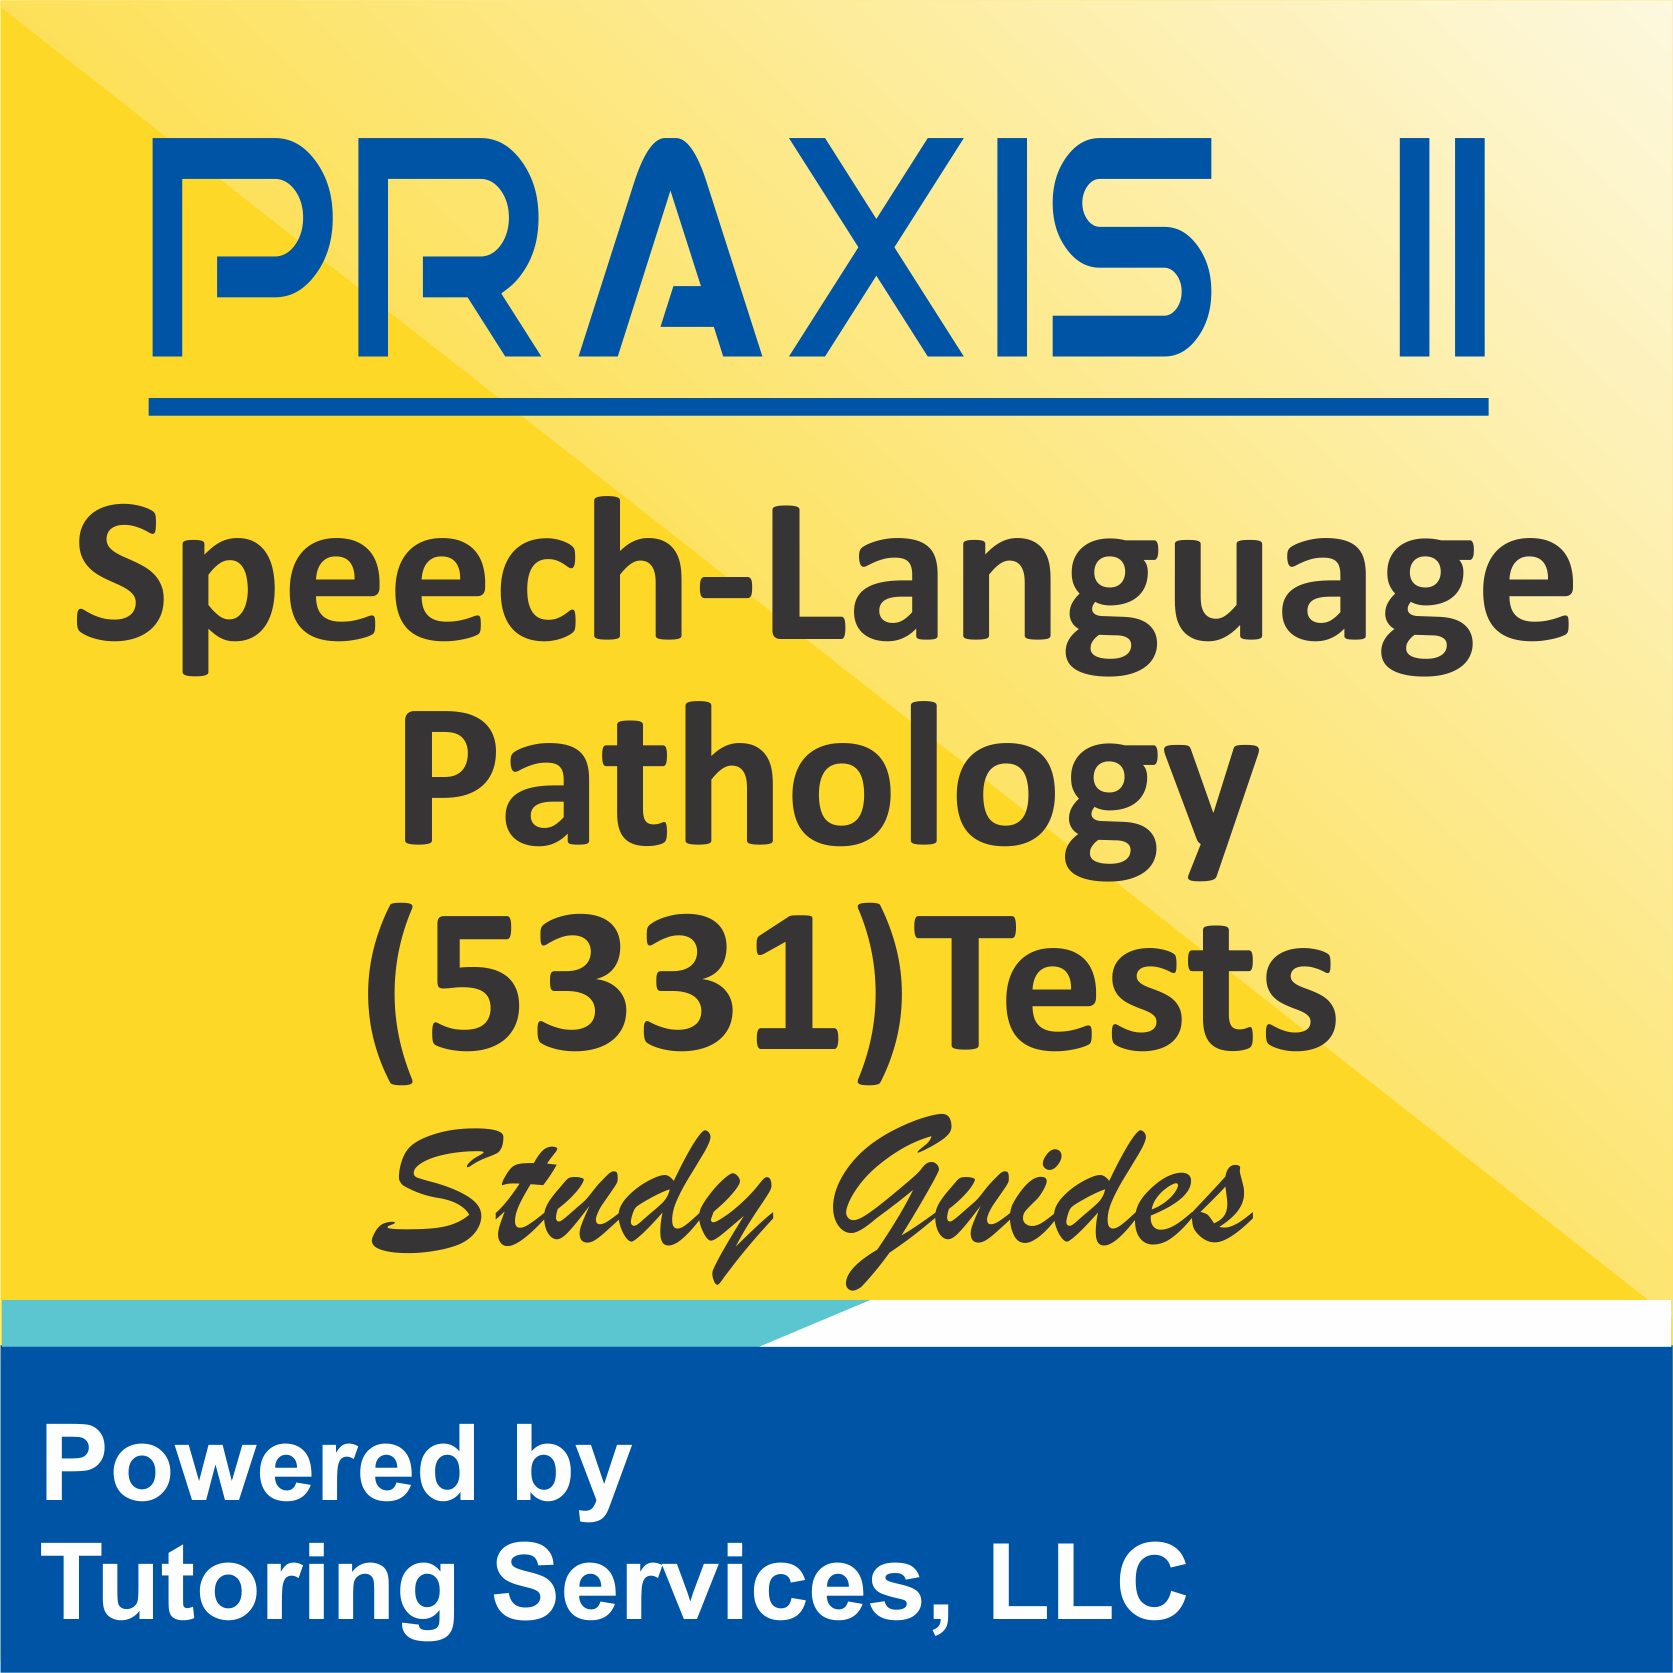 Praxis II Speech-Language Pathology (5330) Examination Syllabus